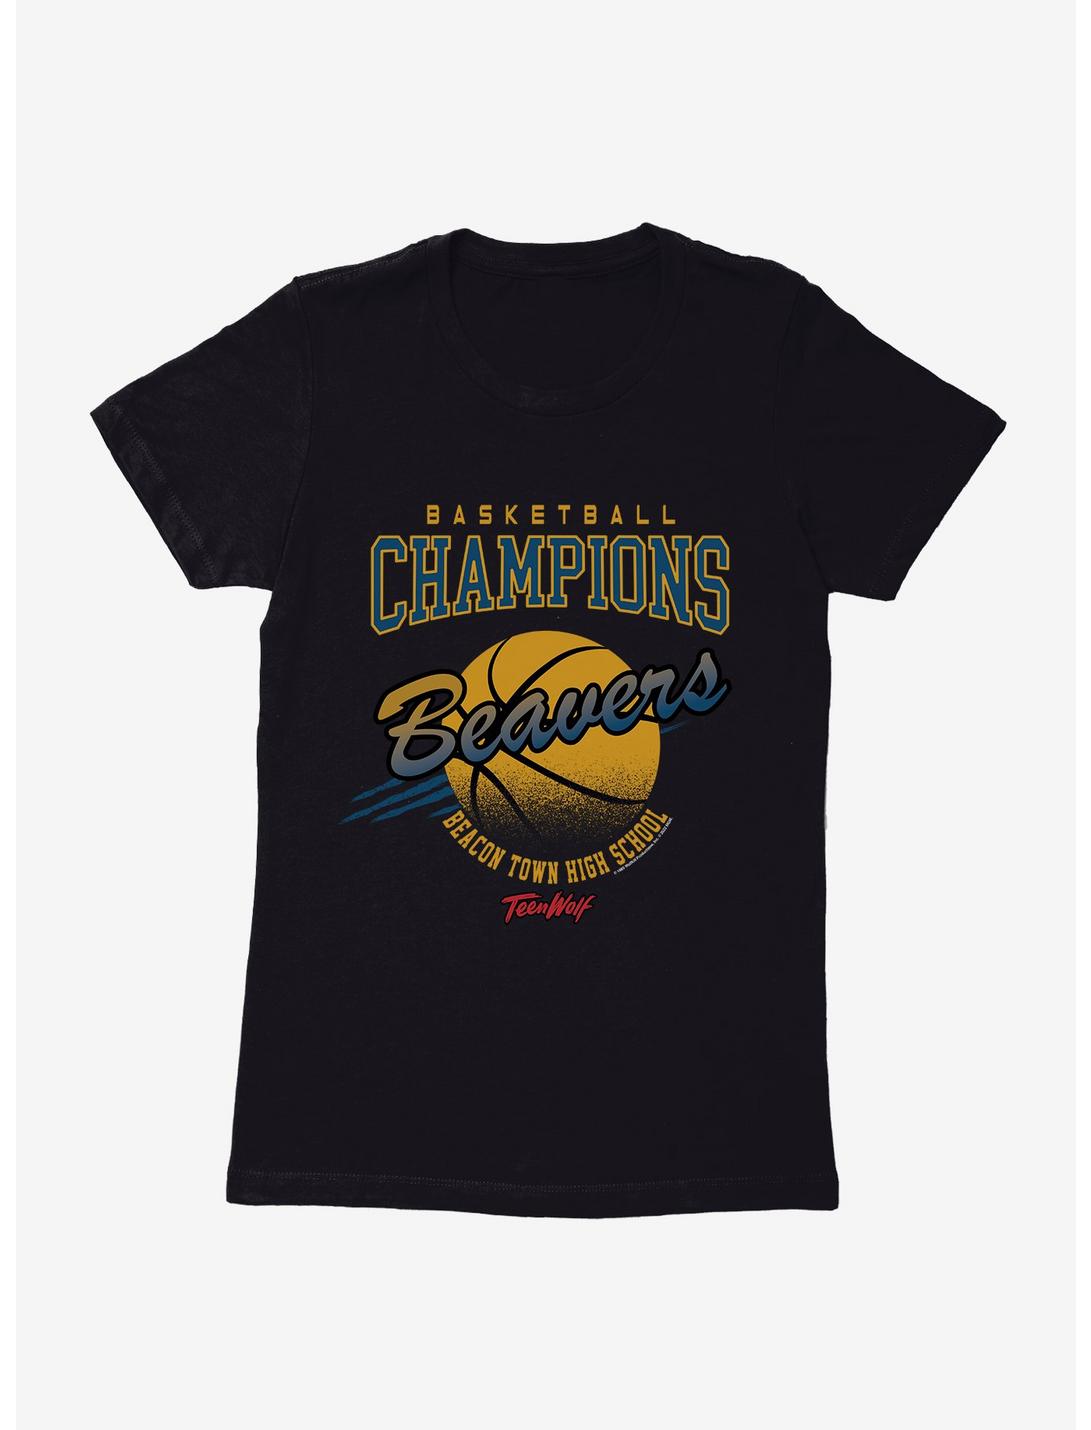 Teen Wolf Basketball Champions Womens T-Shirt, BLACK, hi-res